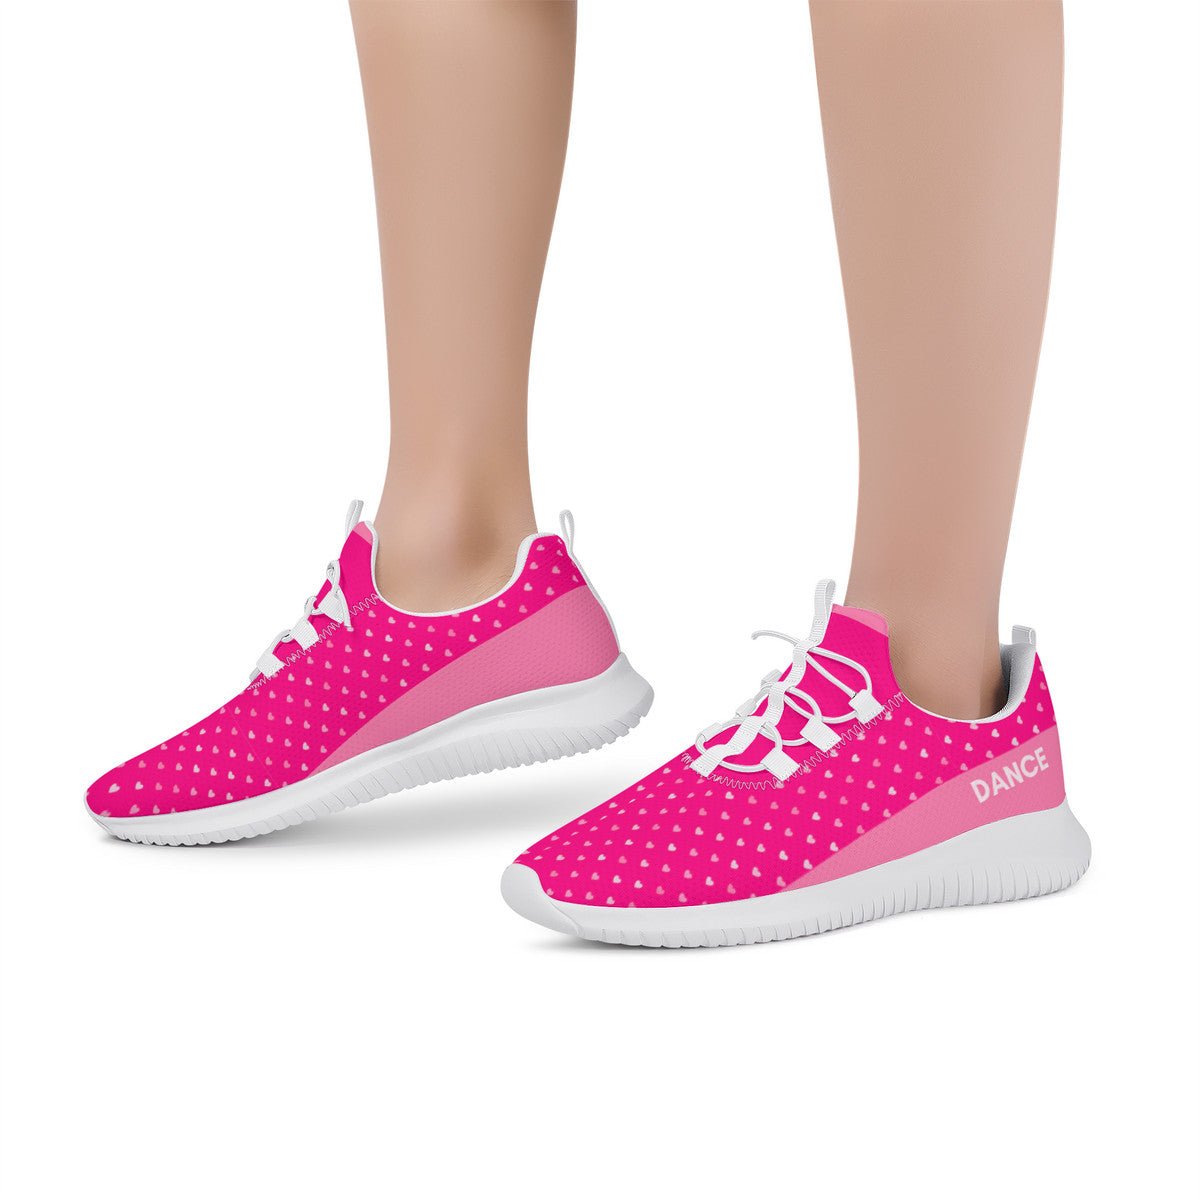 Dance sneakers - Hearts - Pink